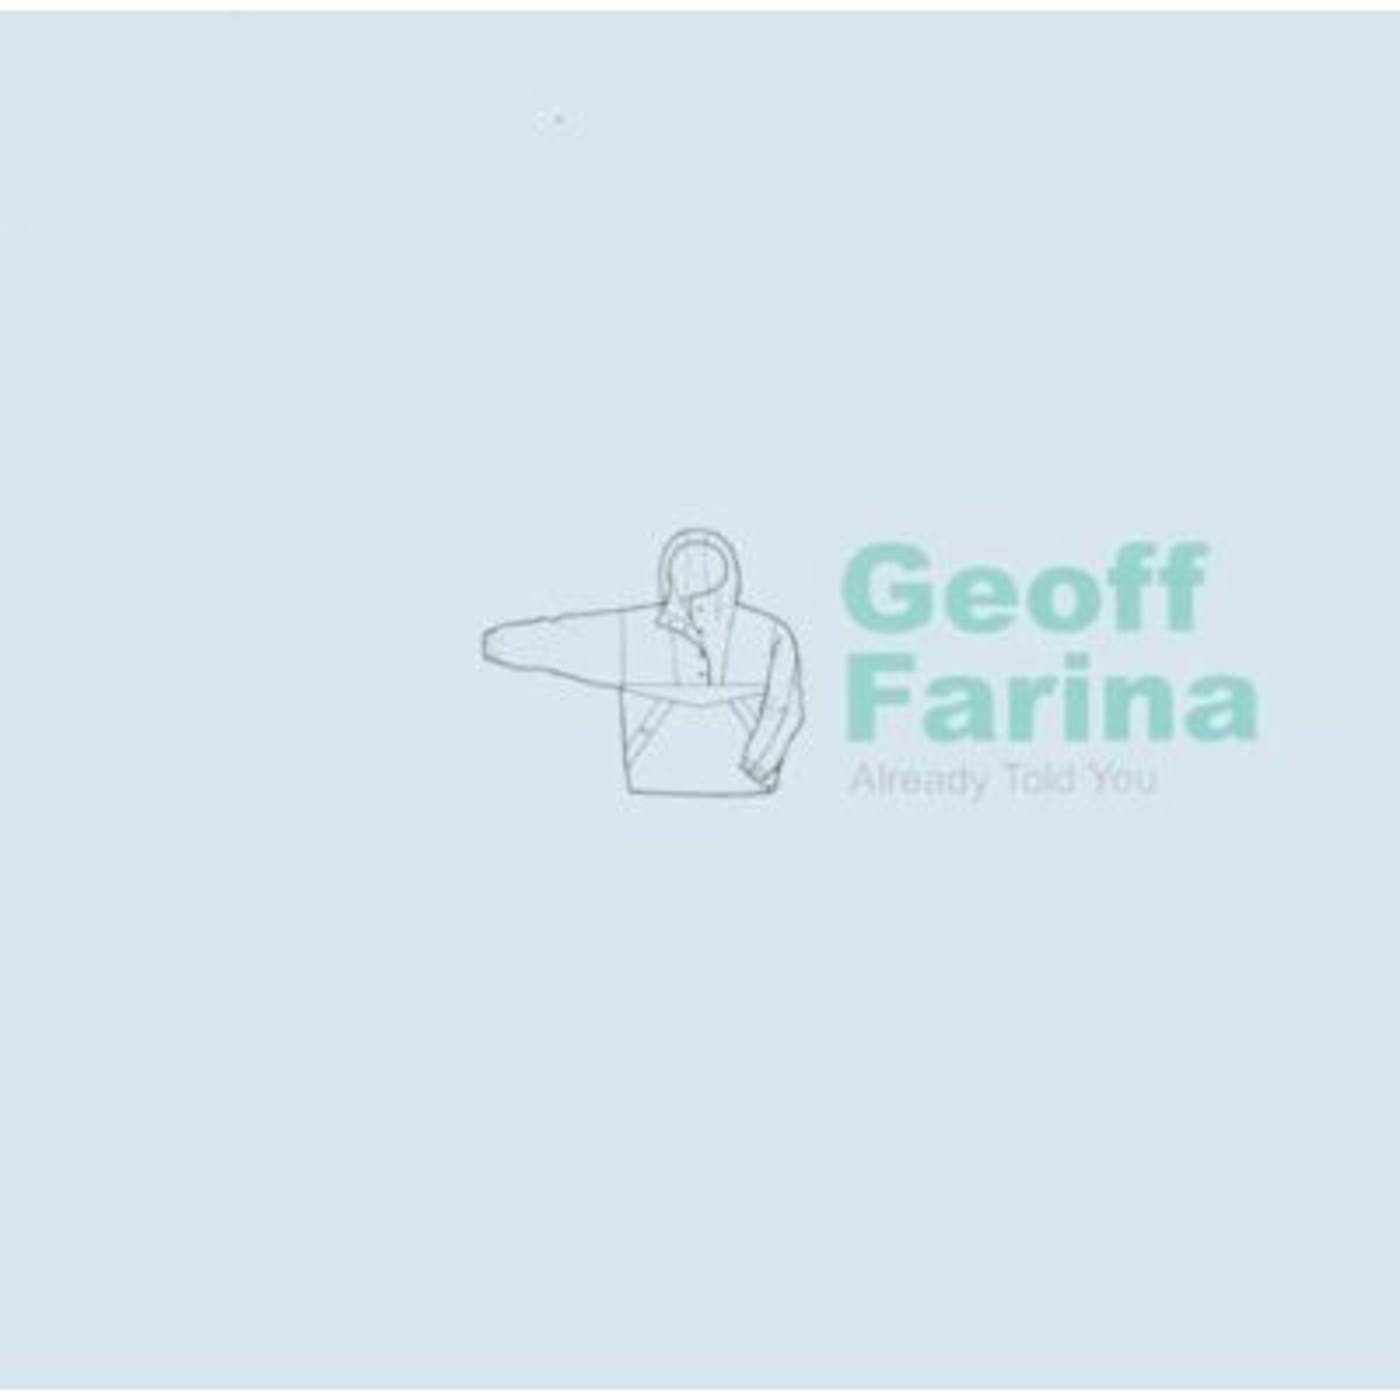 Geoff Farina ALREADY TOLD YOU CD